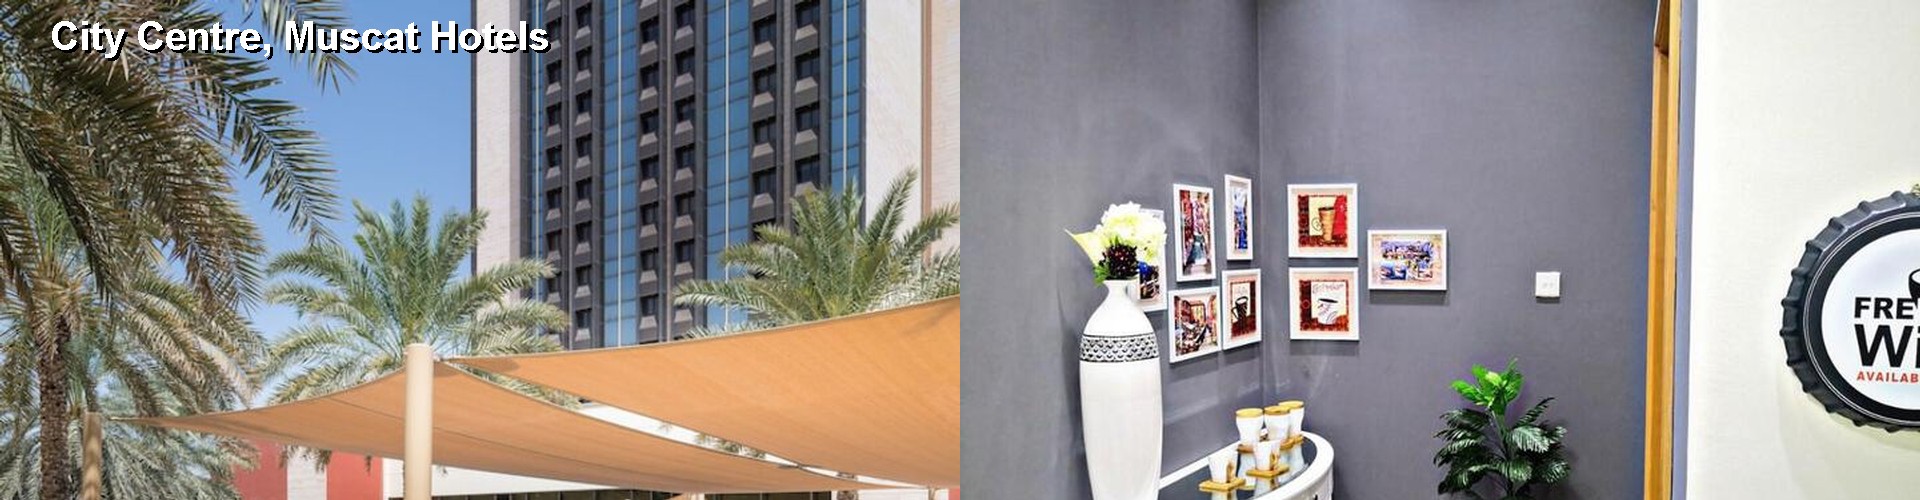 5 Best Hotels near City Centre, Muscat